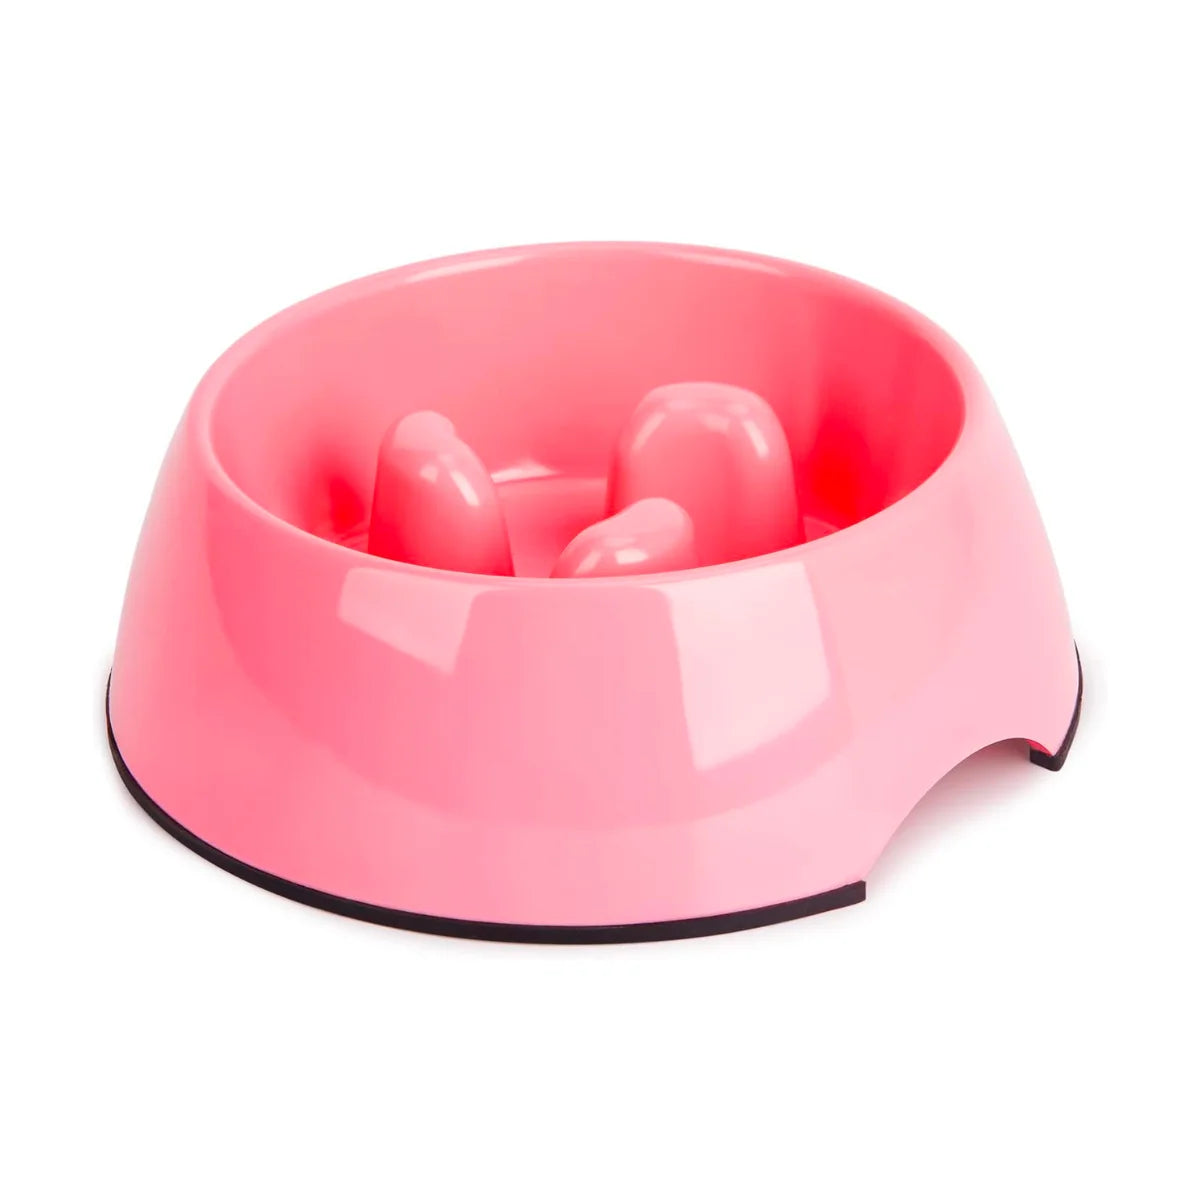 Super Design Slow Feed Bowl - Pink